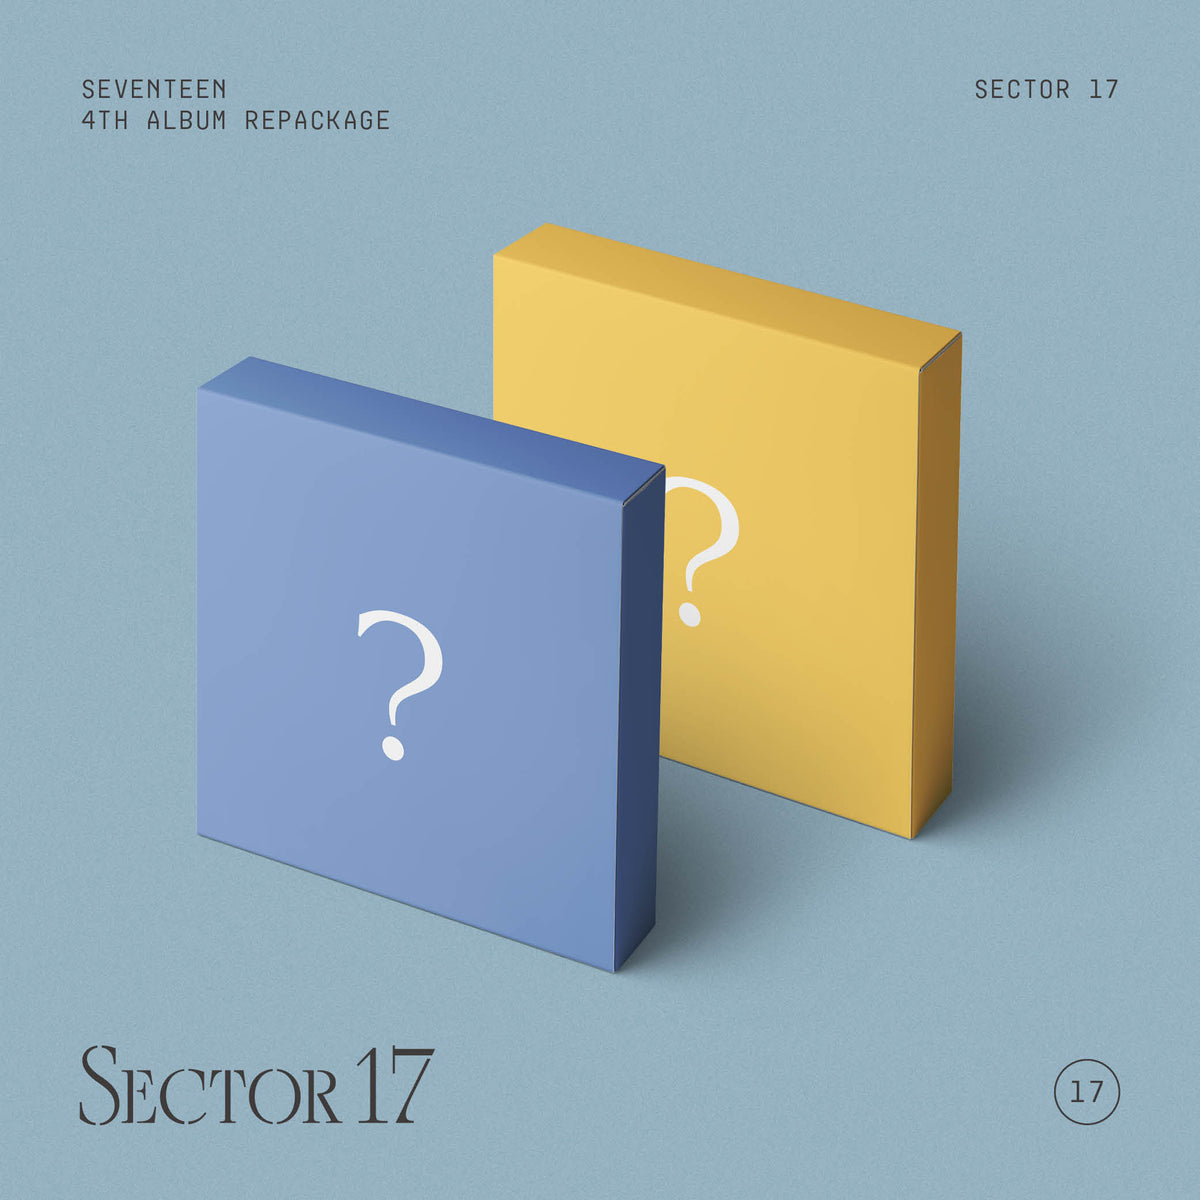 SEVENTEEN - 4th Album Repackage - SECTOR 17